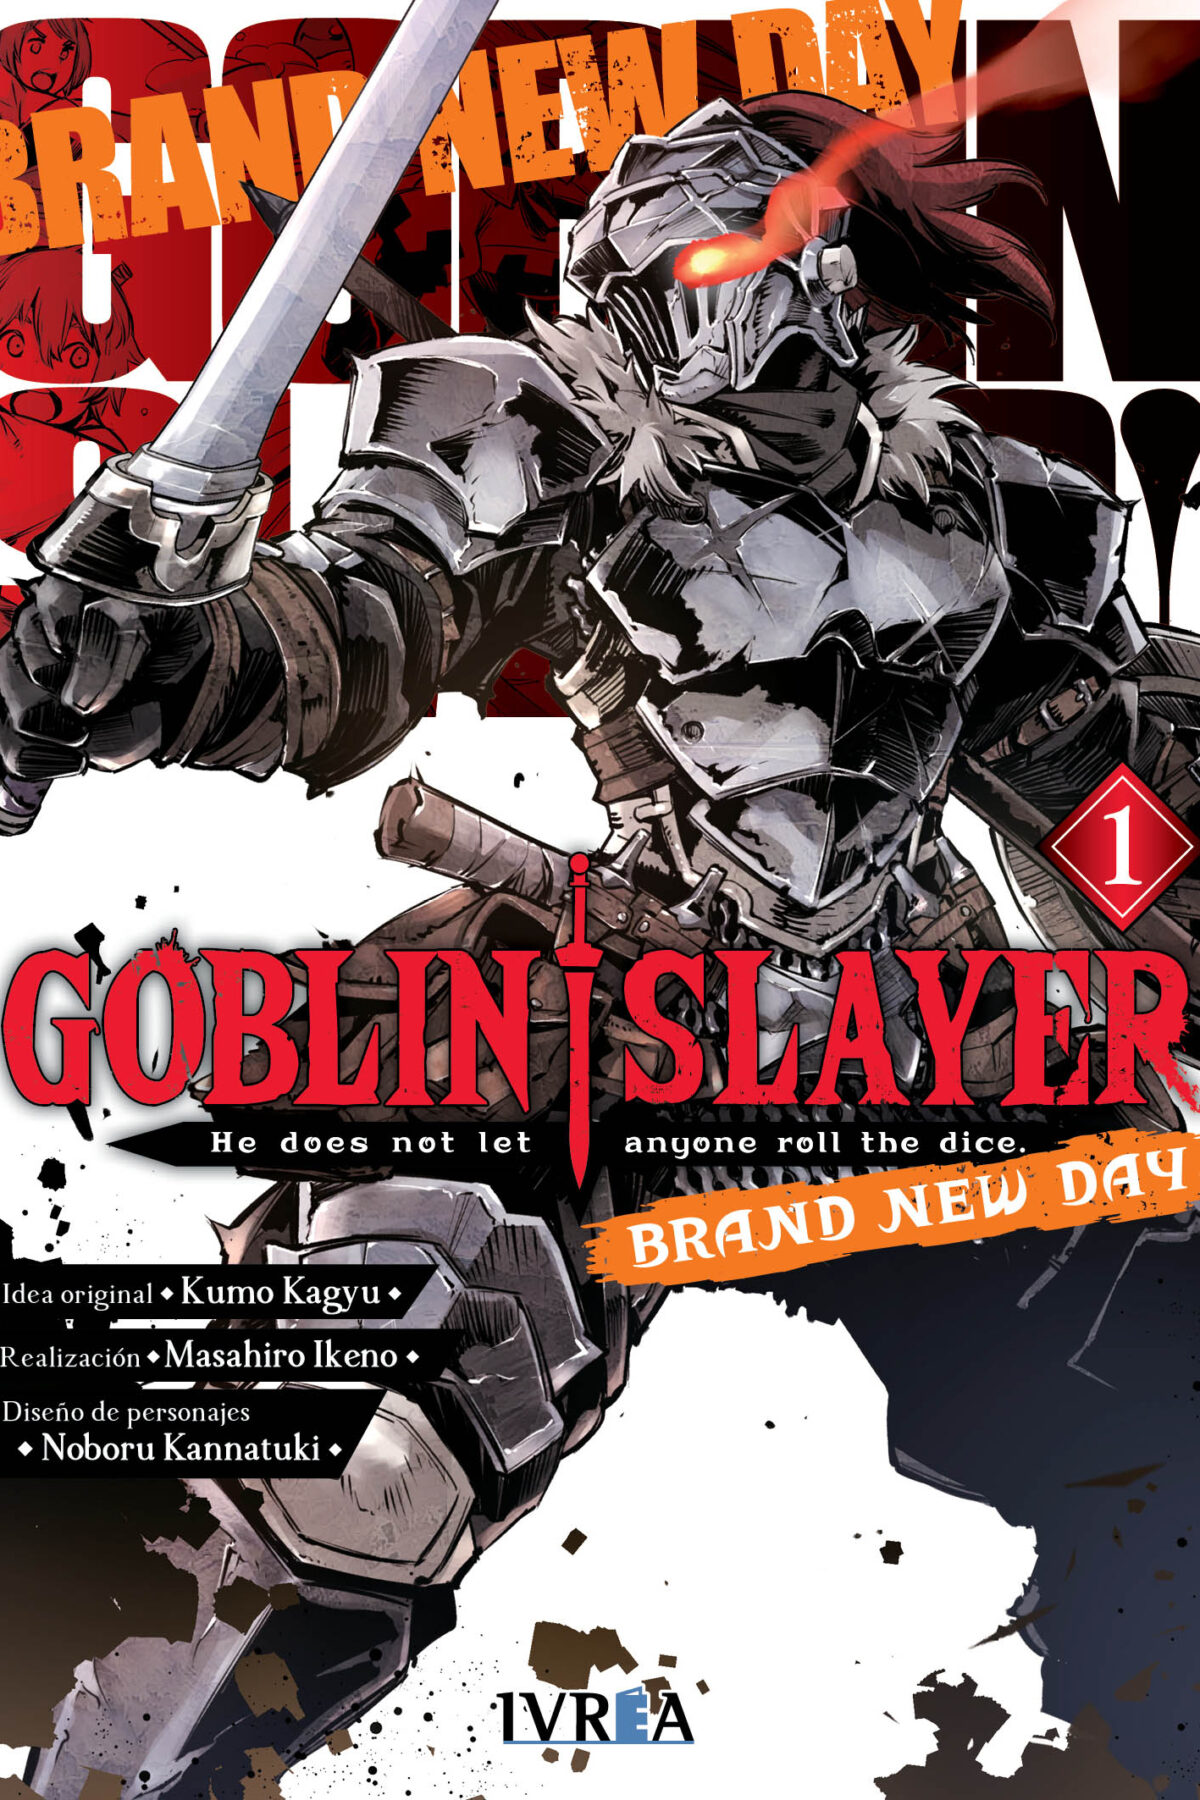 Manga Goblin Slayer Brand New Day